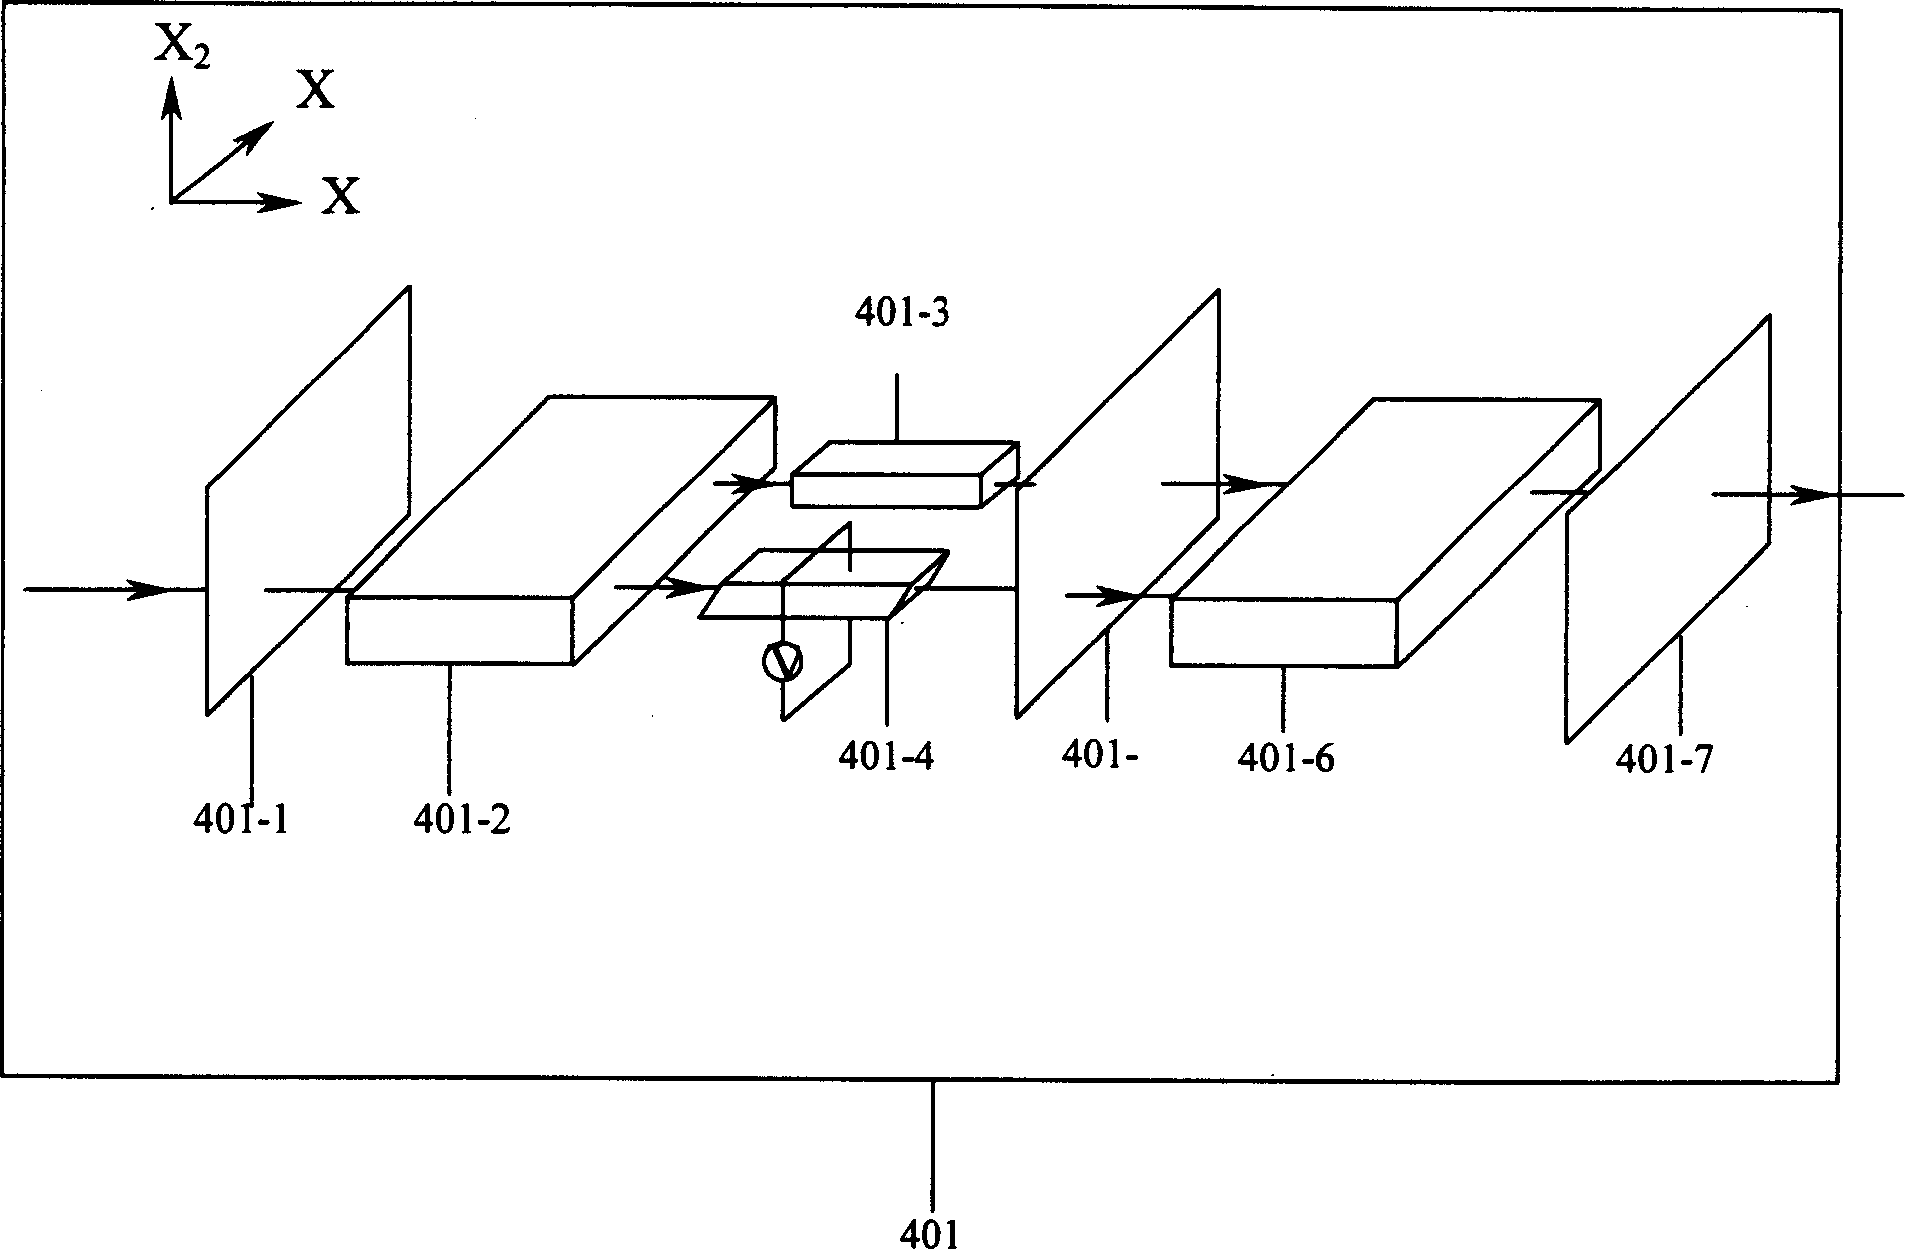 Electro-optical tuning flat filter